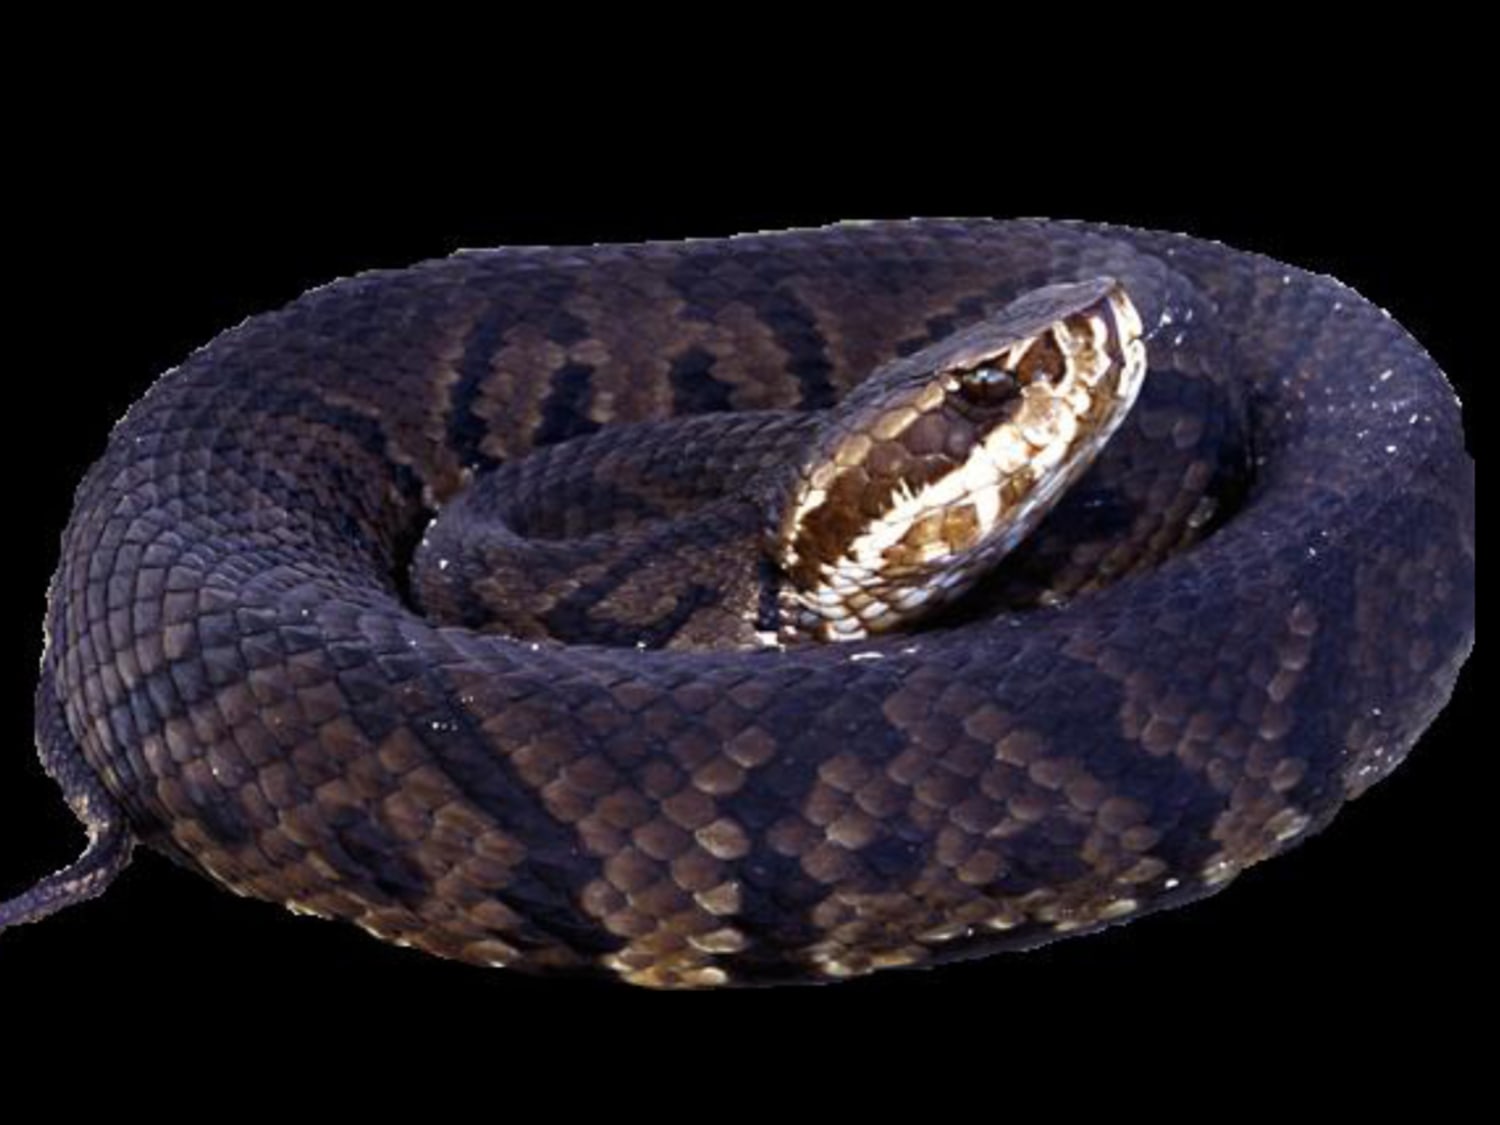 Venomous Snake Catcher, Cottonmouth - North Florida